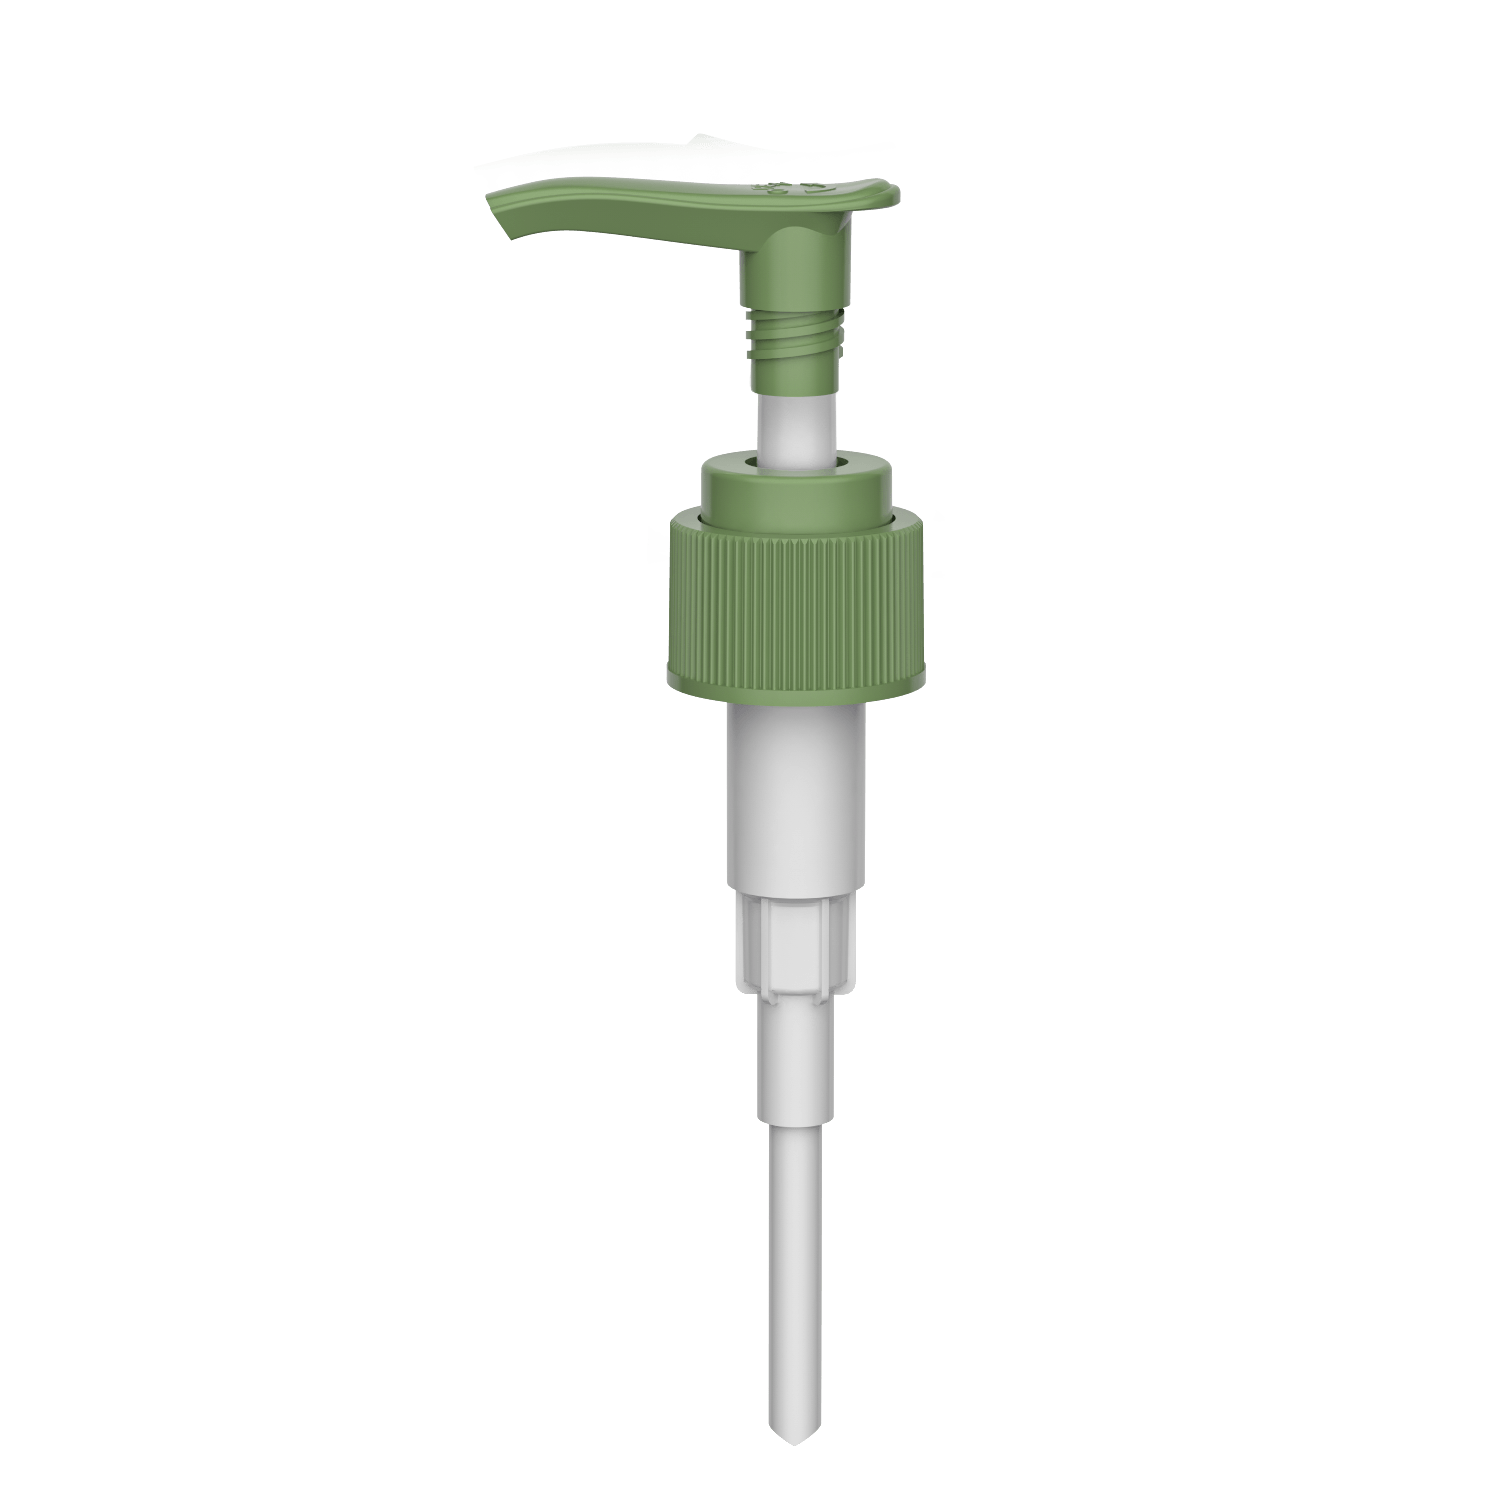 HD-606B 24/410 Schraube Handseife Pumpe Verriegelung Shampoo-Spender 2.0-2.2CC Lotion Pumpe